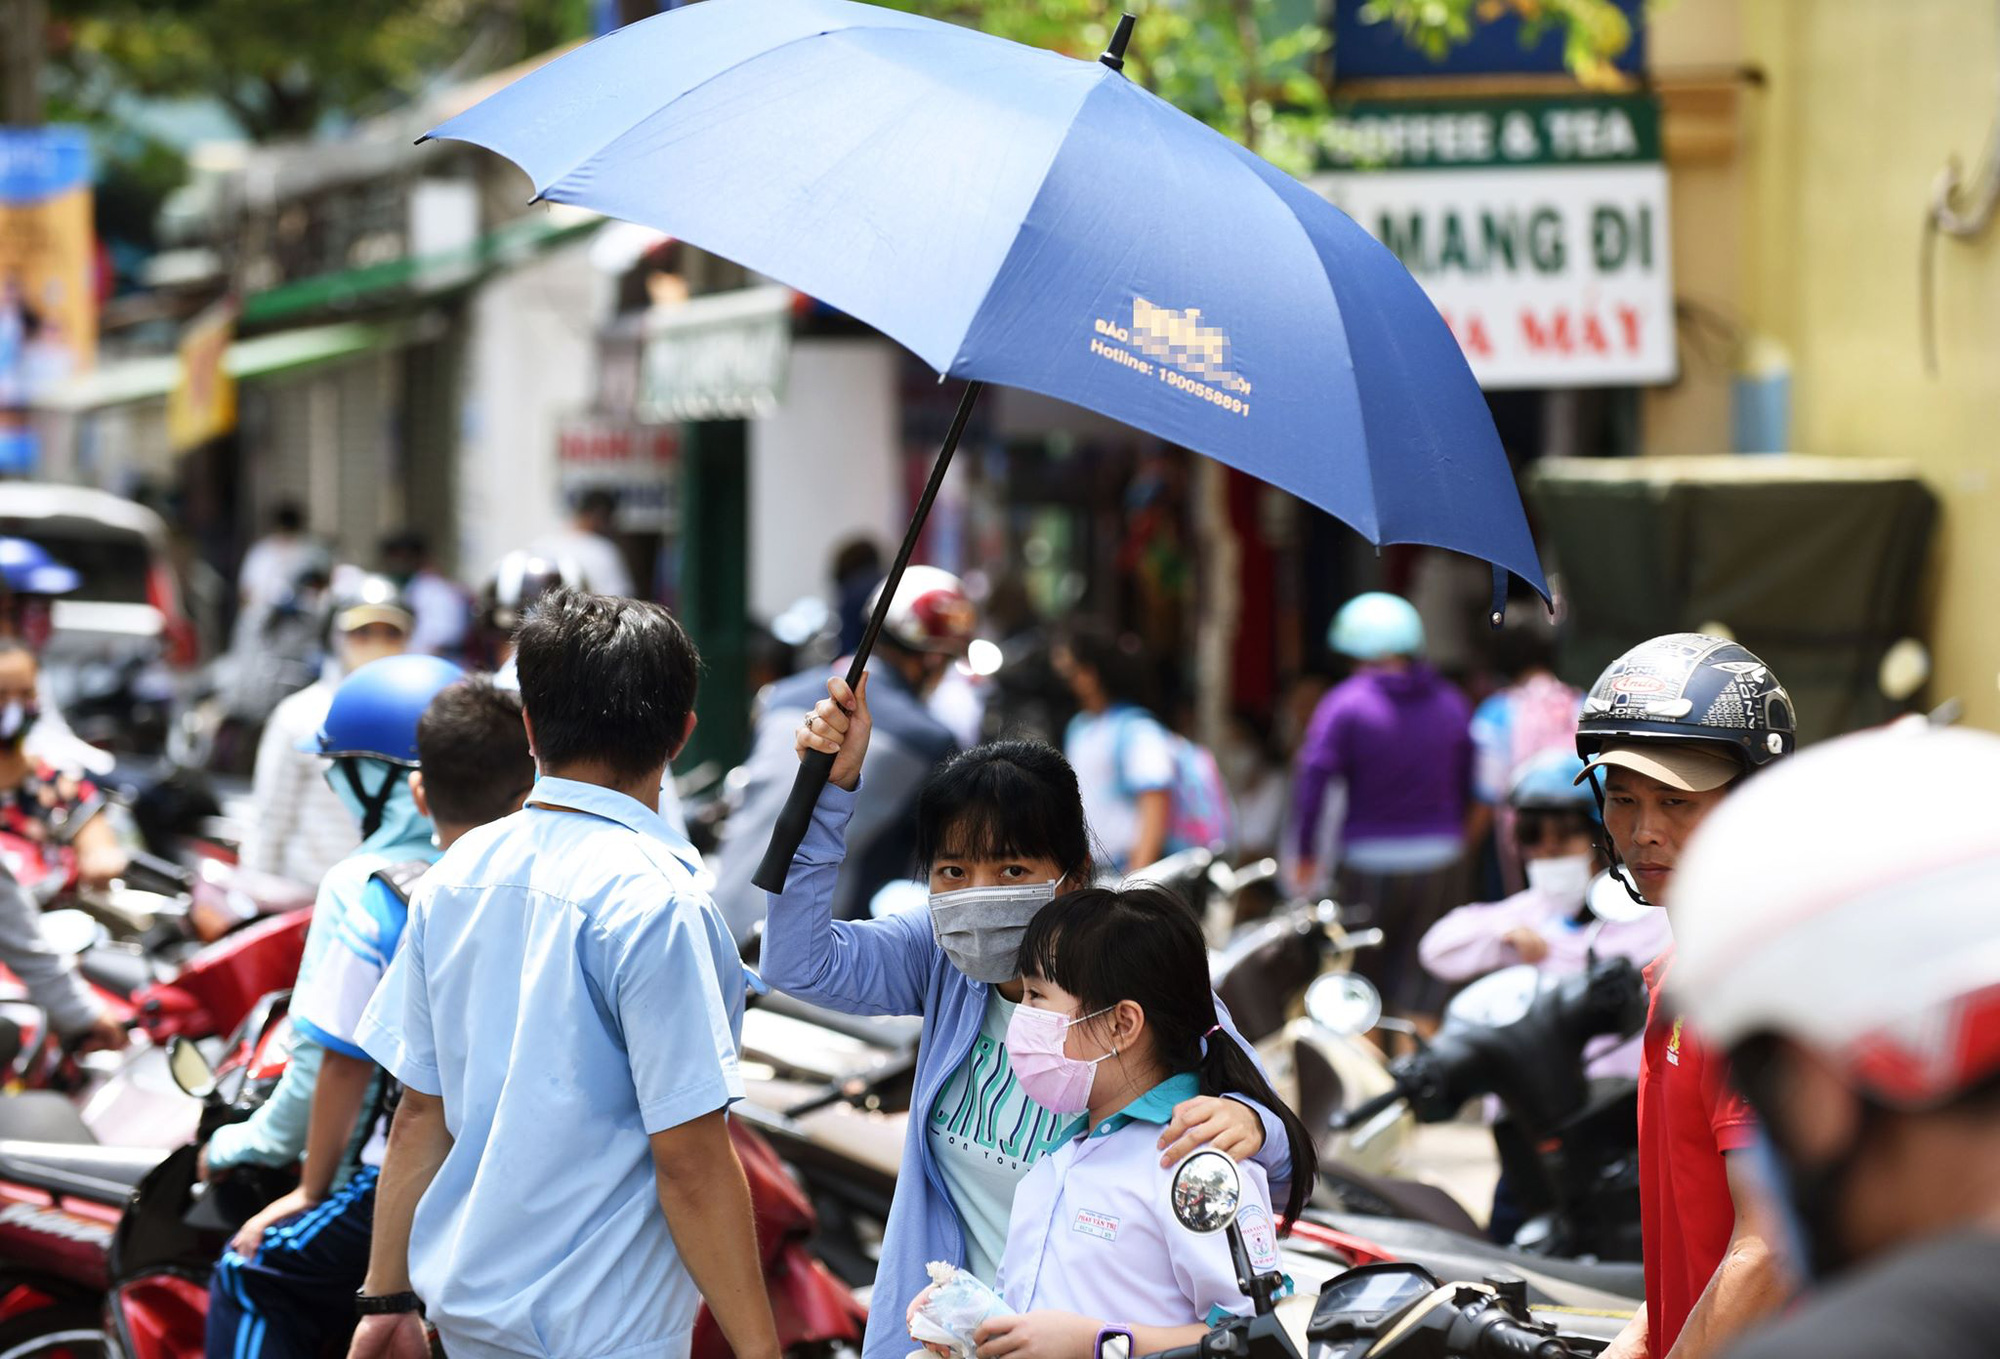 Scorching weather plagues Ho Chi Minh City as rainy season nears